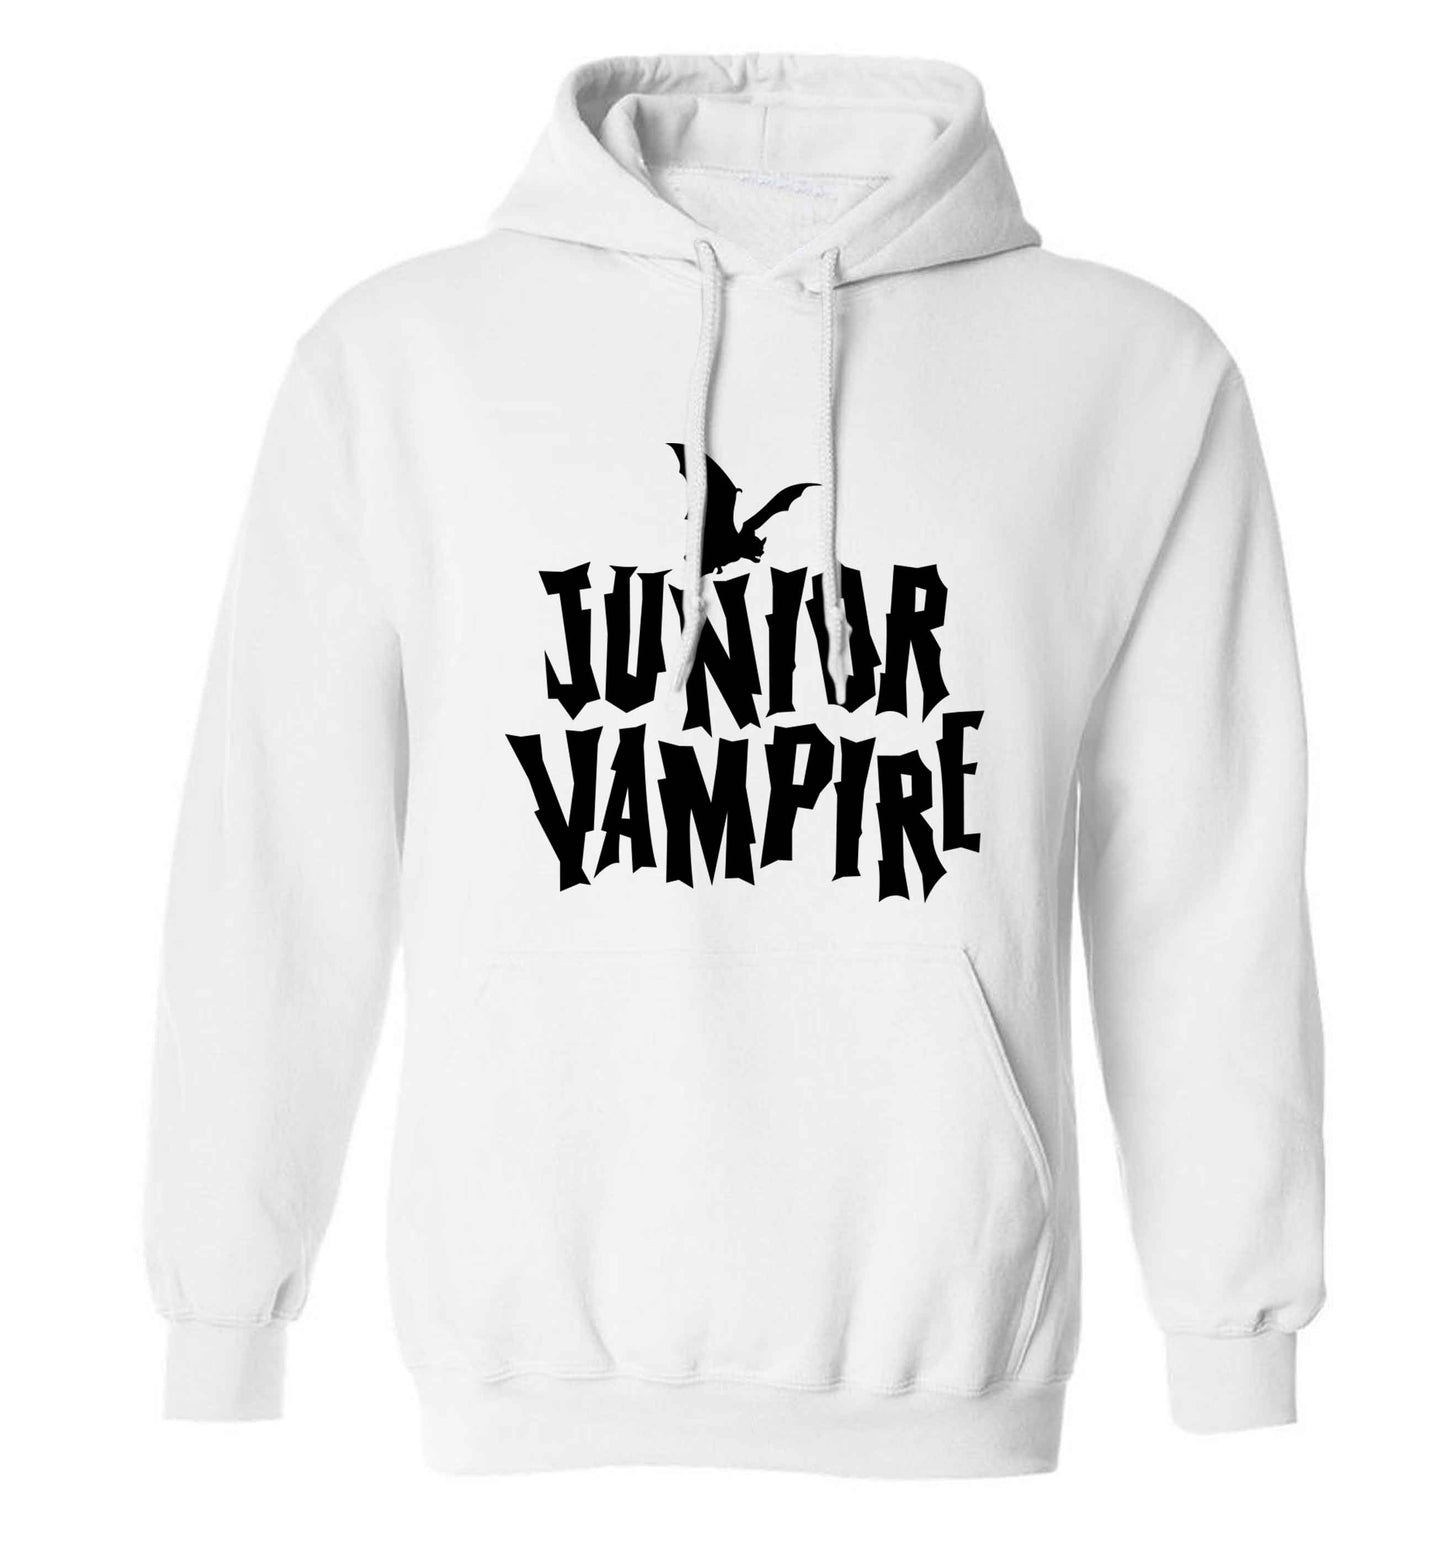 Junior vampire adults unisex white hoodie 2XL